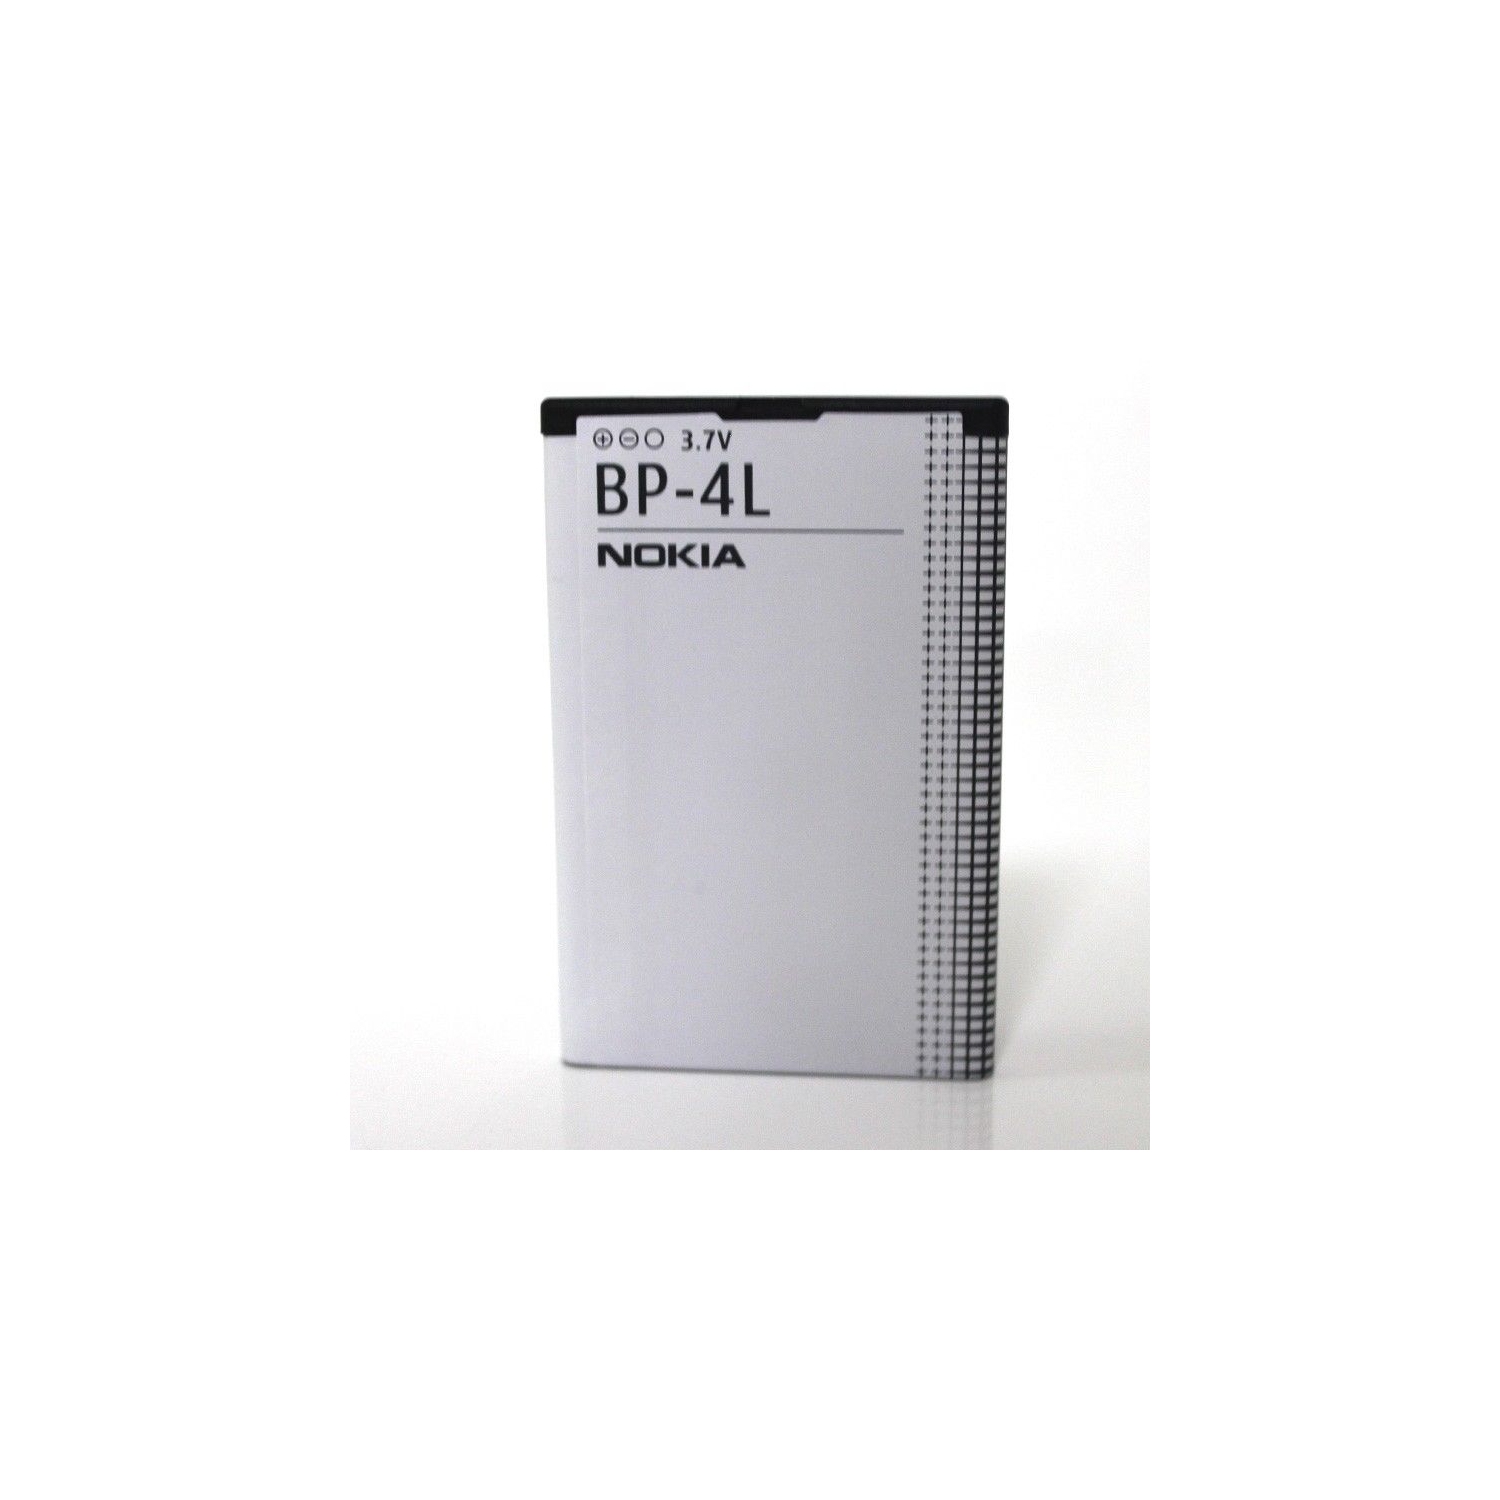 BP-4L Replacement Battery for Nokia E63 E71x E72 E73 E90 N97 N810 6650 6760 6790